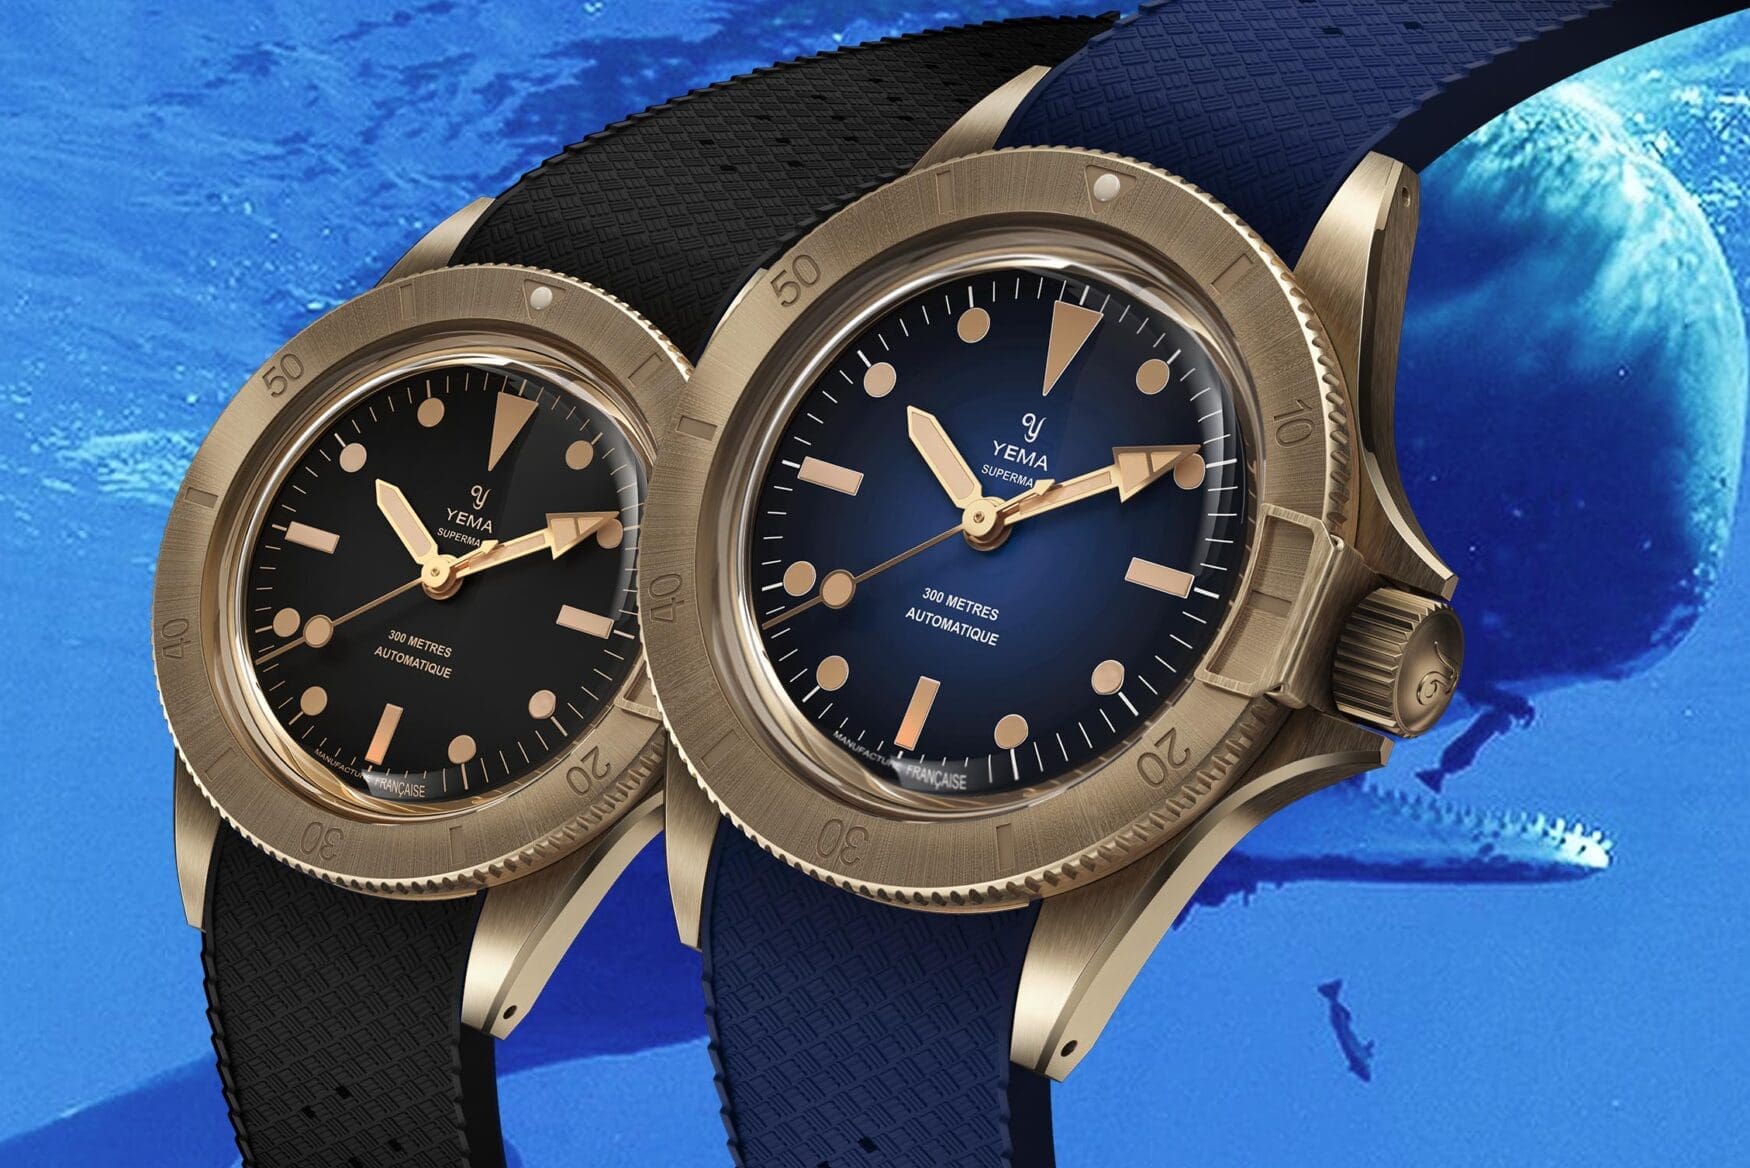 The Yema Superman Bronze CMM.10 sets a new standard for budget bronze watches